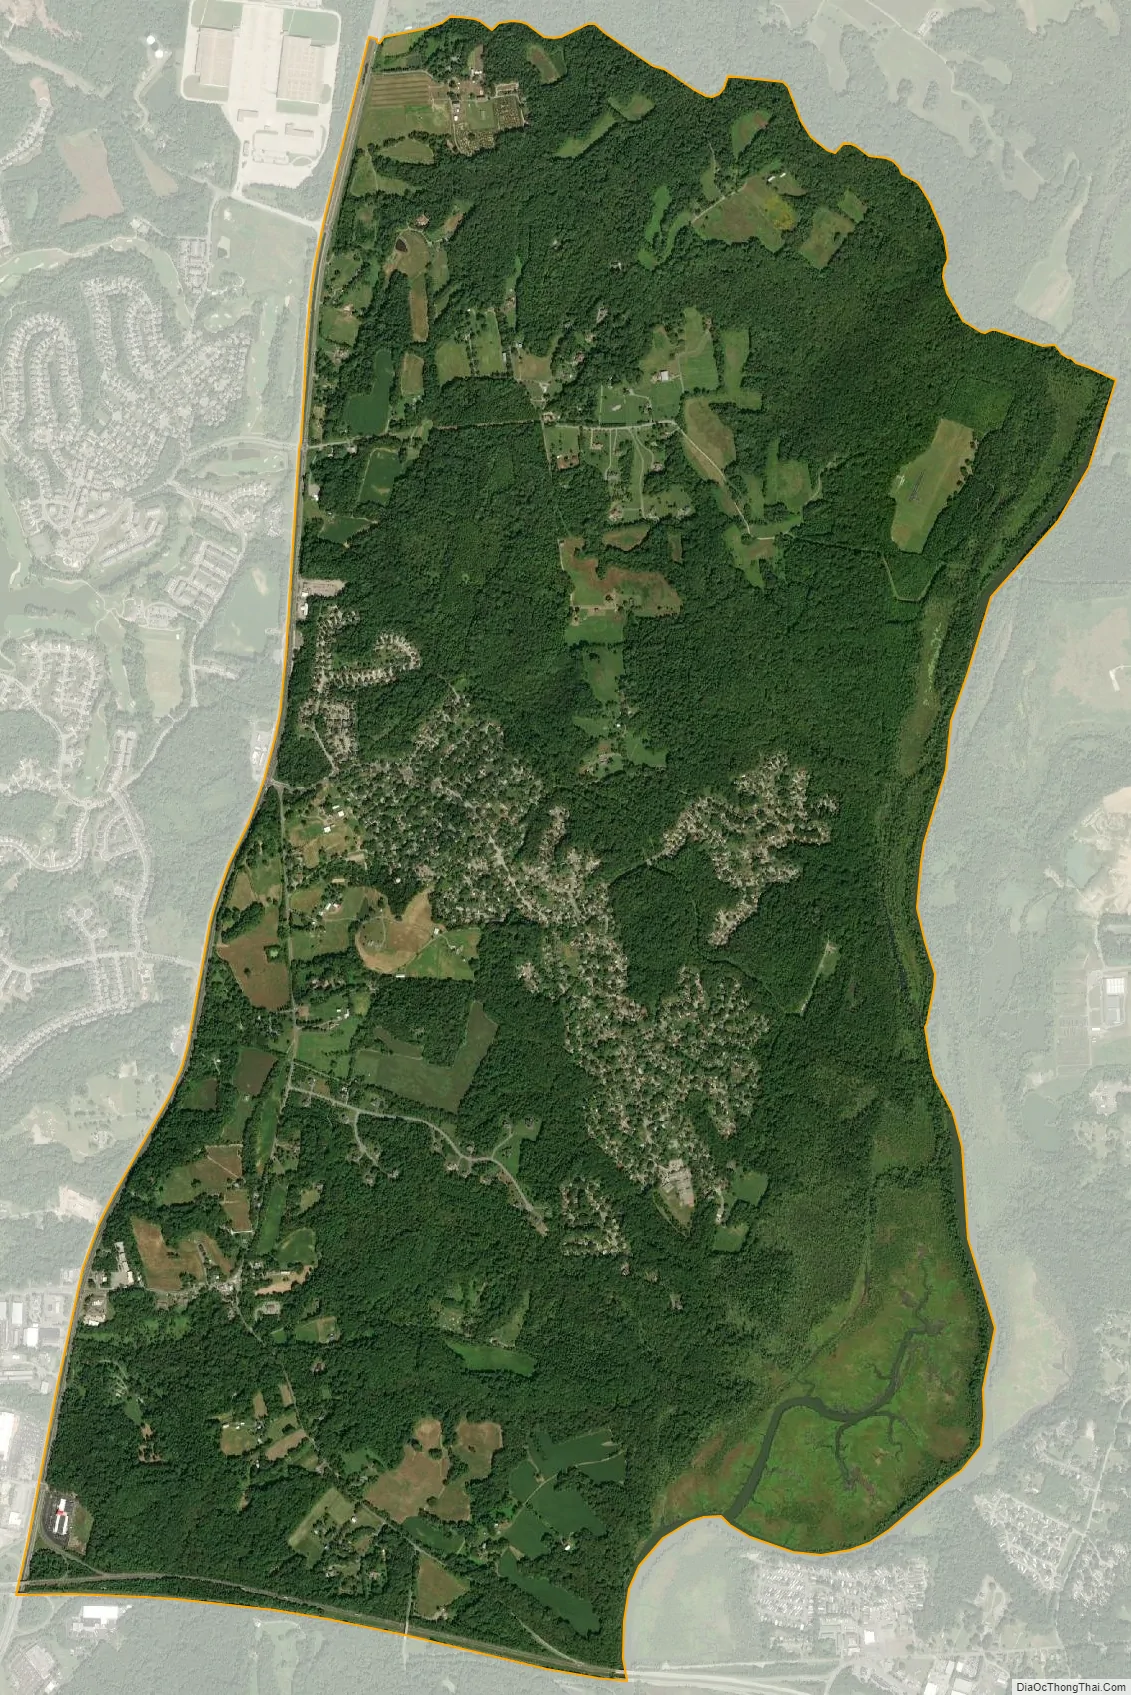 Map of Marlboro Meadows CDP